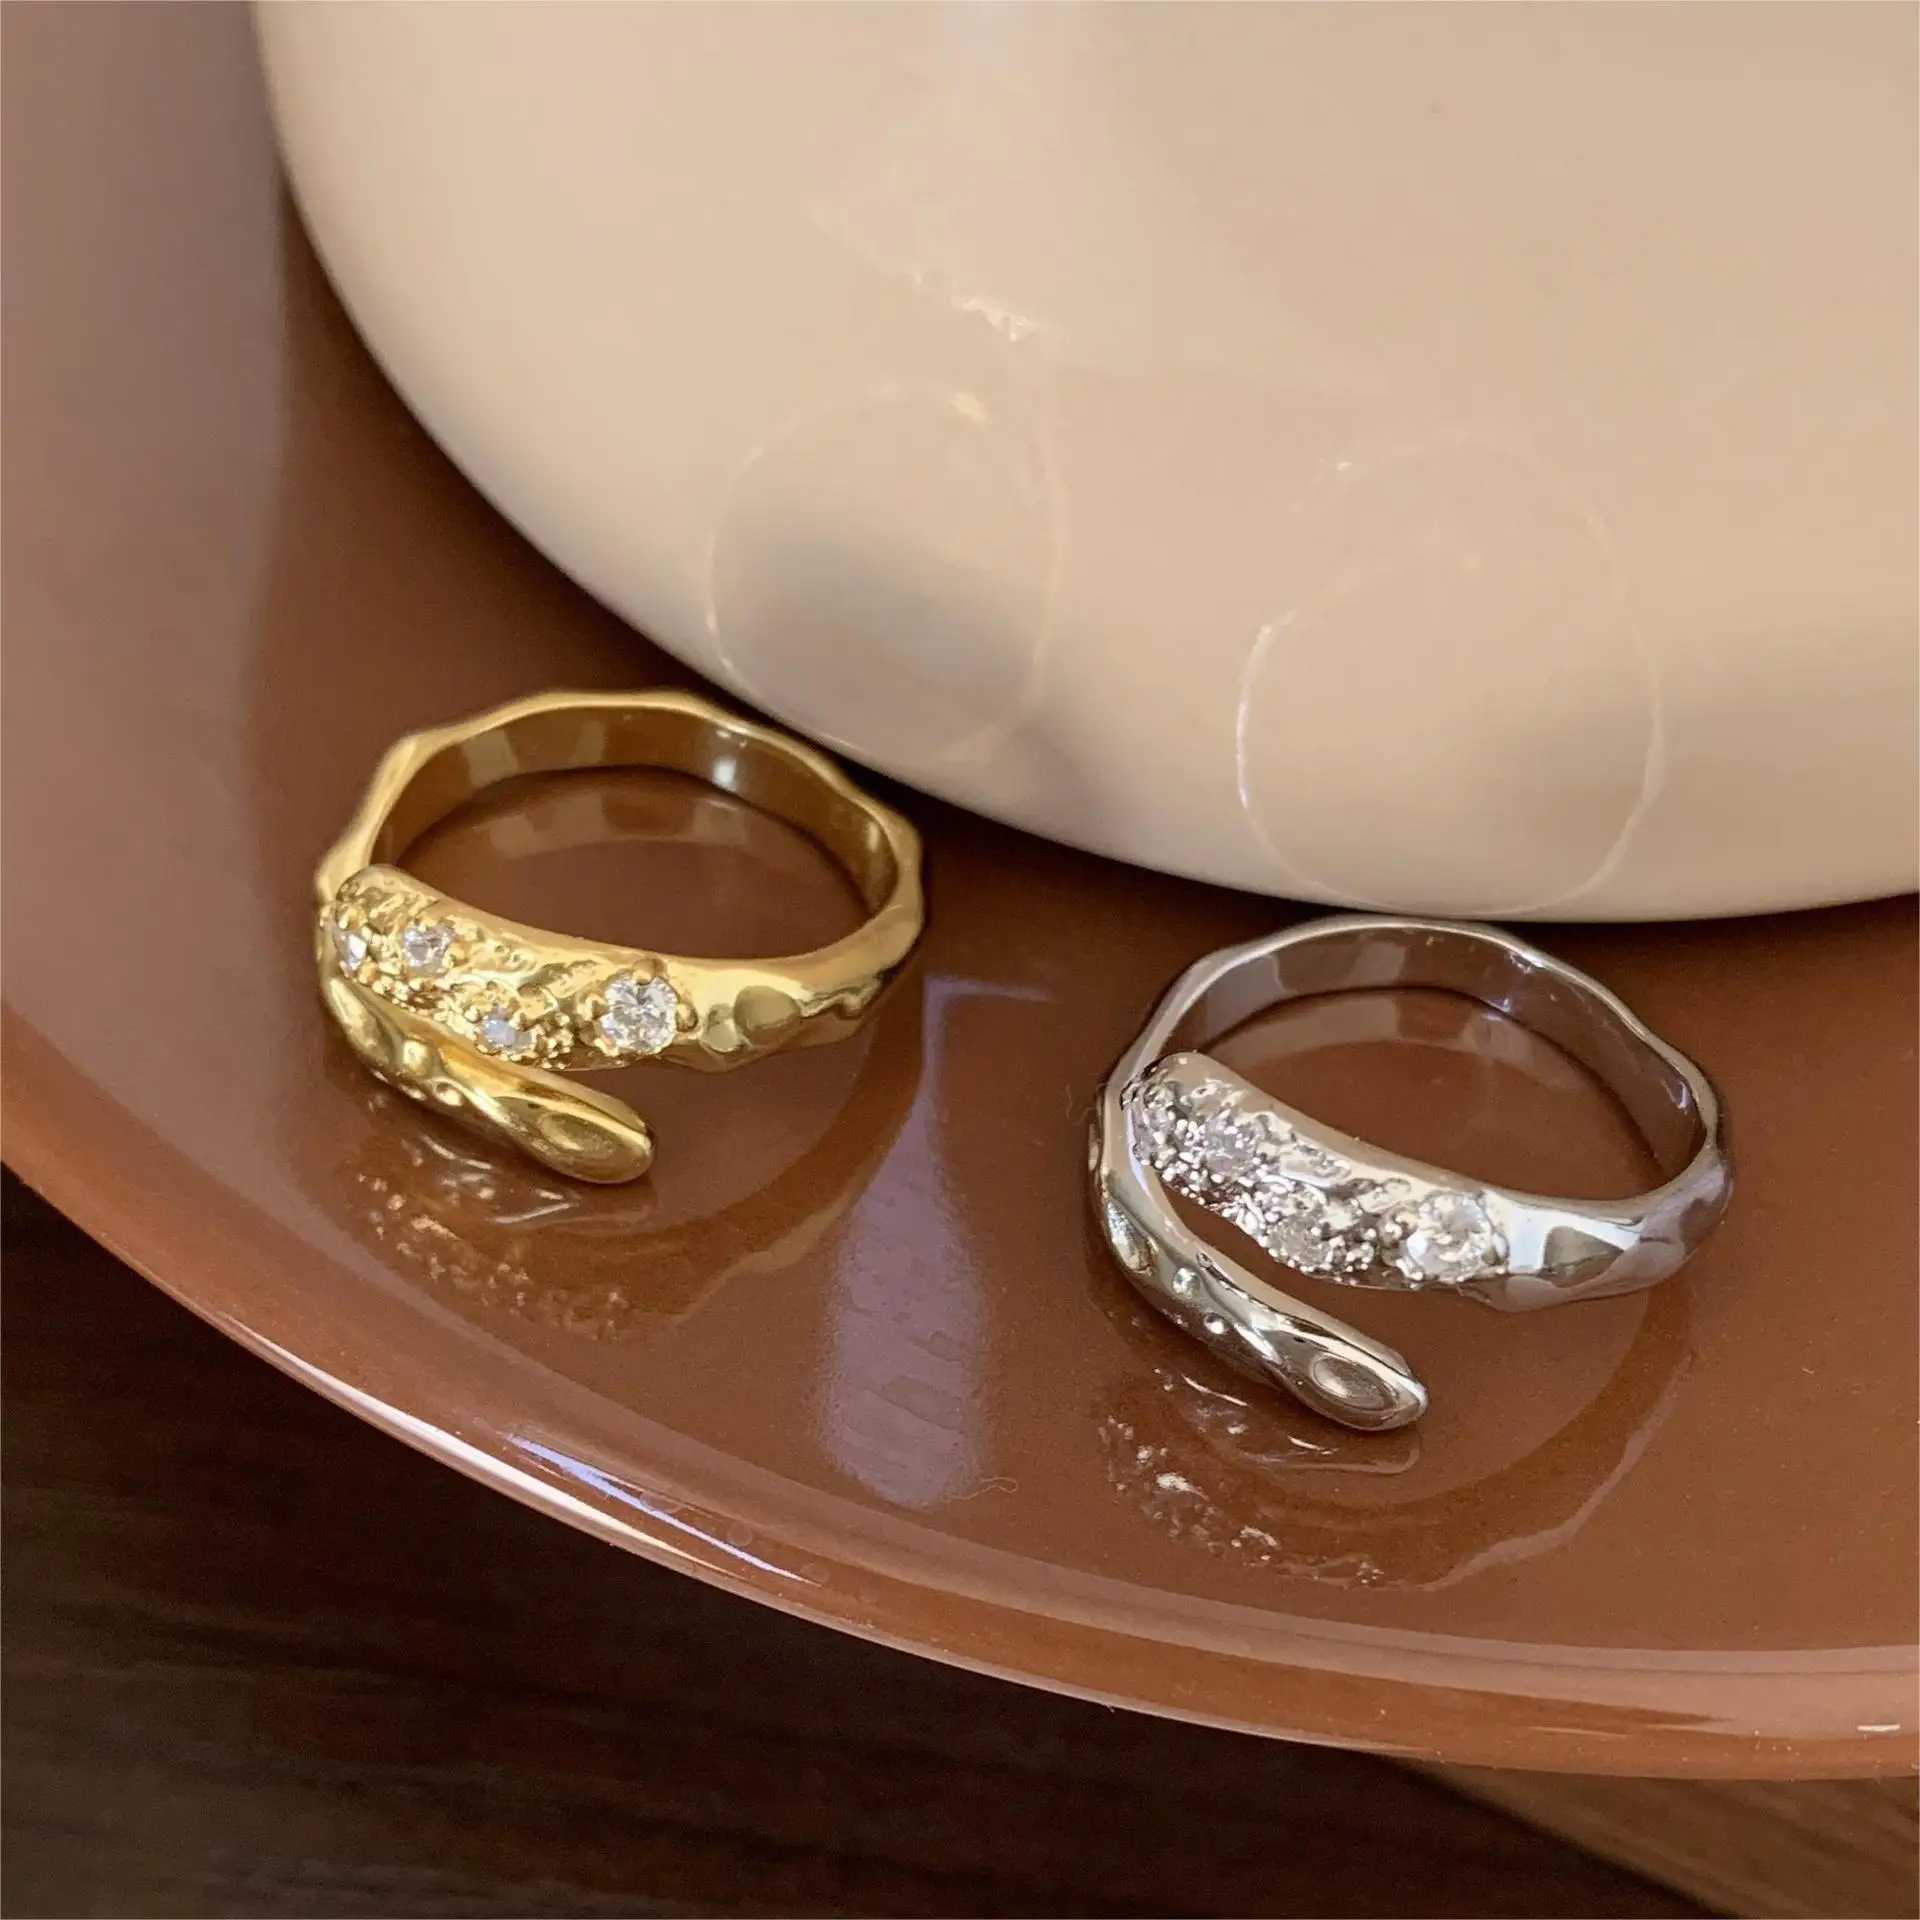 

PANJBJ 925 Sterling Silve Zircon Ring for Women Girl Gift Lunar Crater Irregular Minimalism Design INS Jewelry Dropshipping